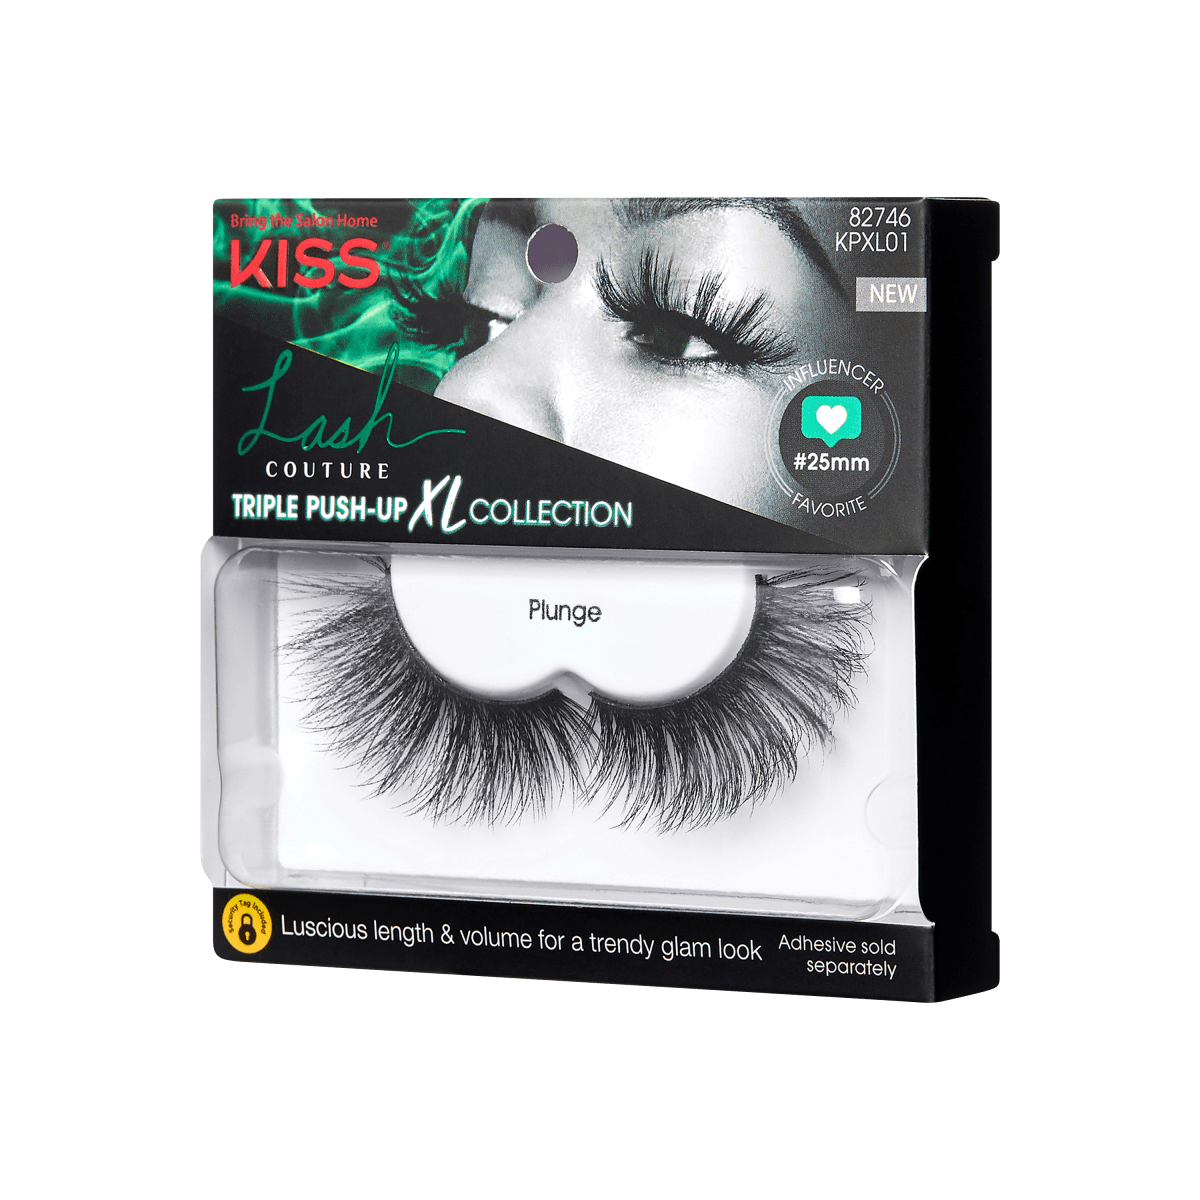 KISS Lash Couture Triple Push-up - XL Collection Plunge